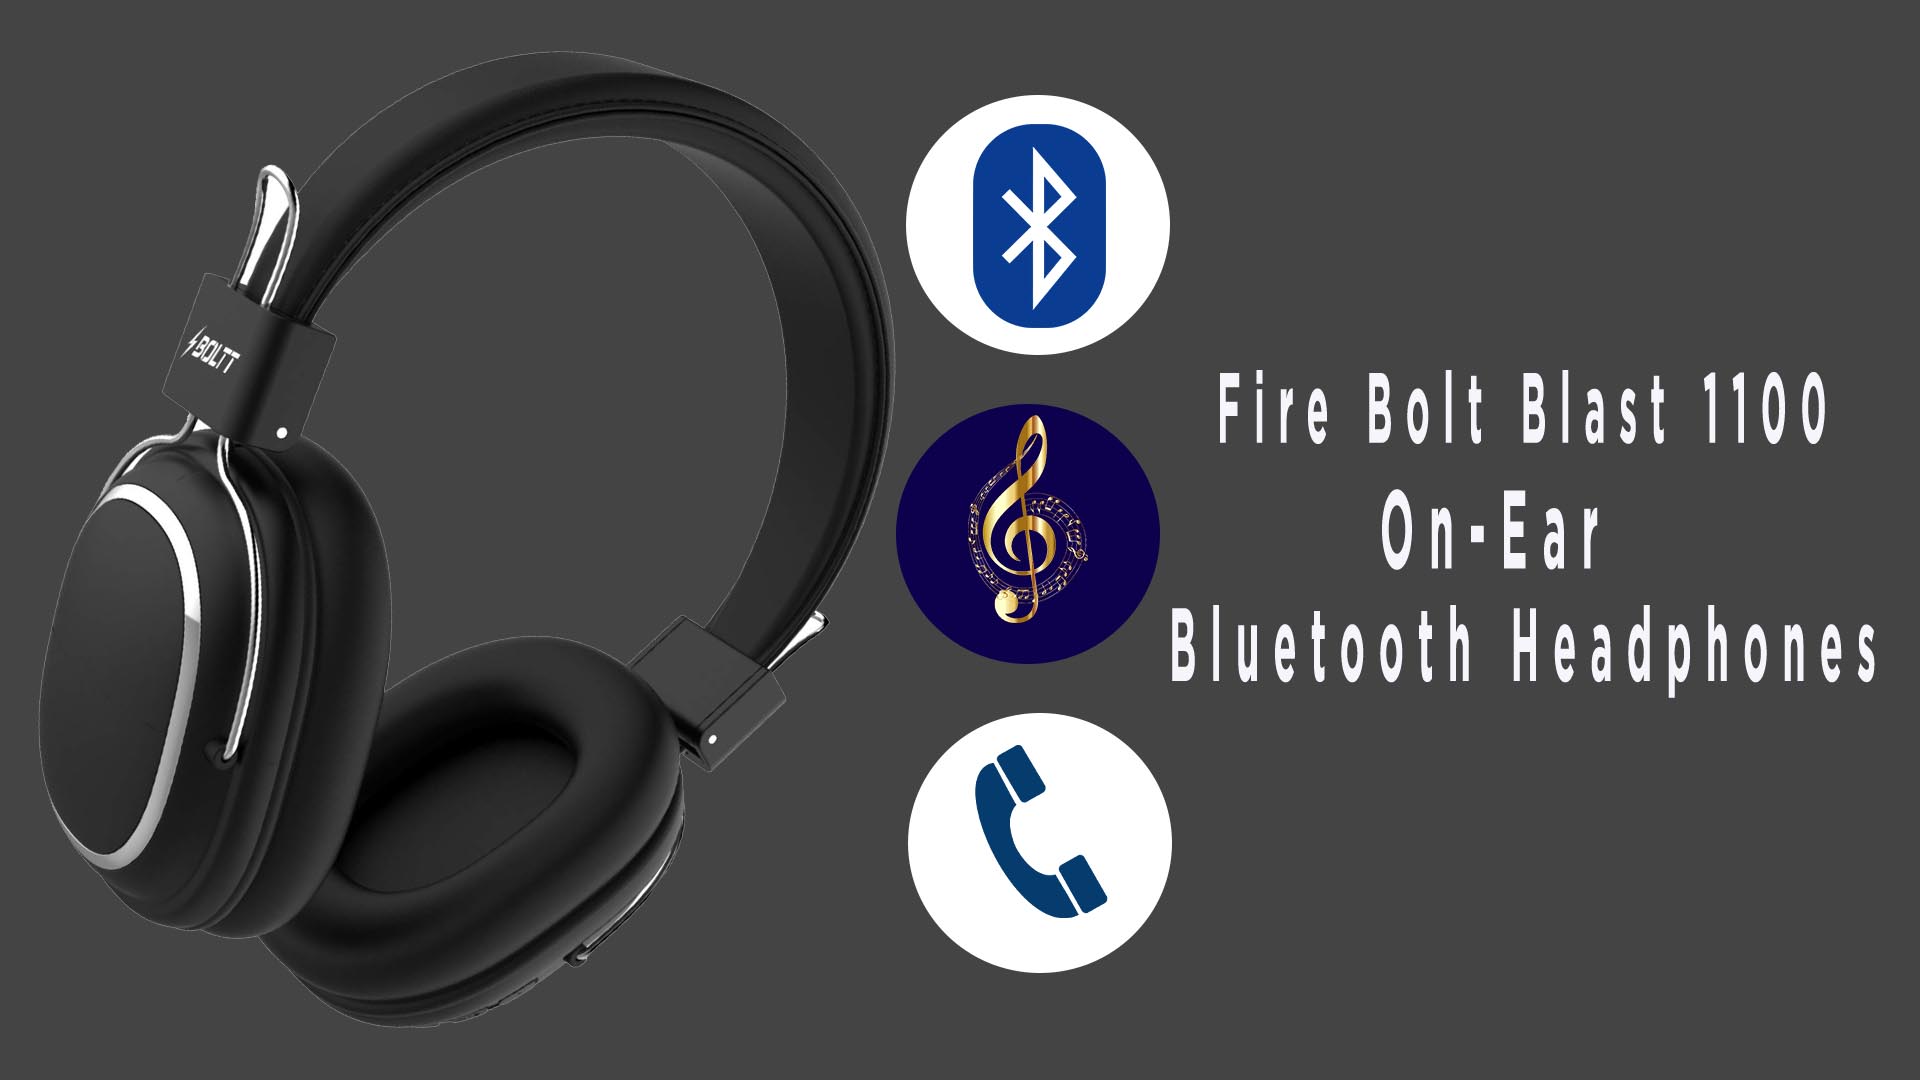 Fire-Boltt Blast 1100 On-Ear Bluetooth Headphones